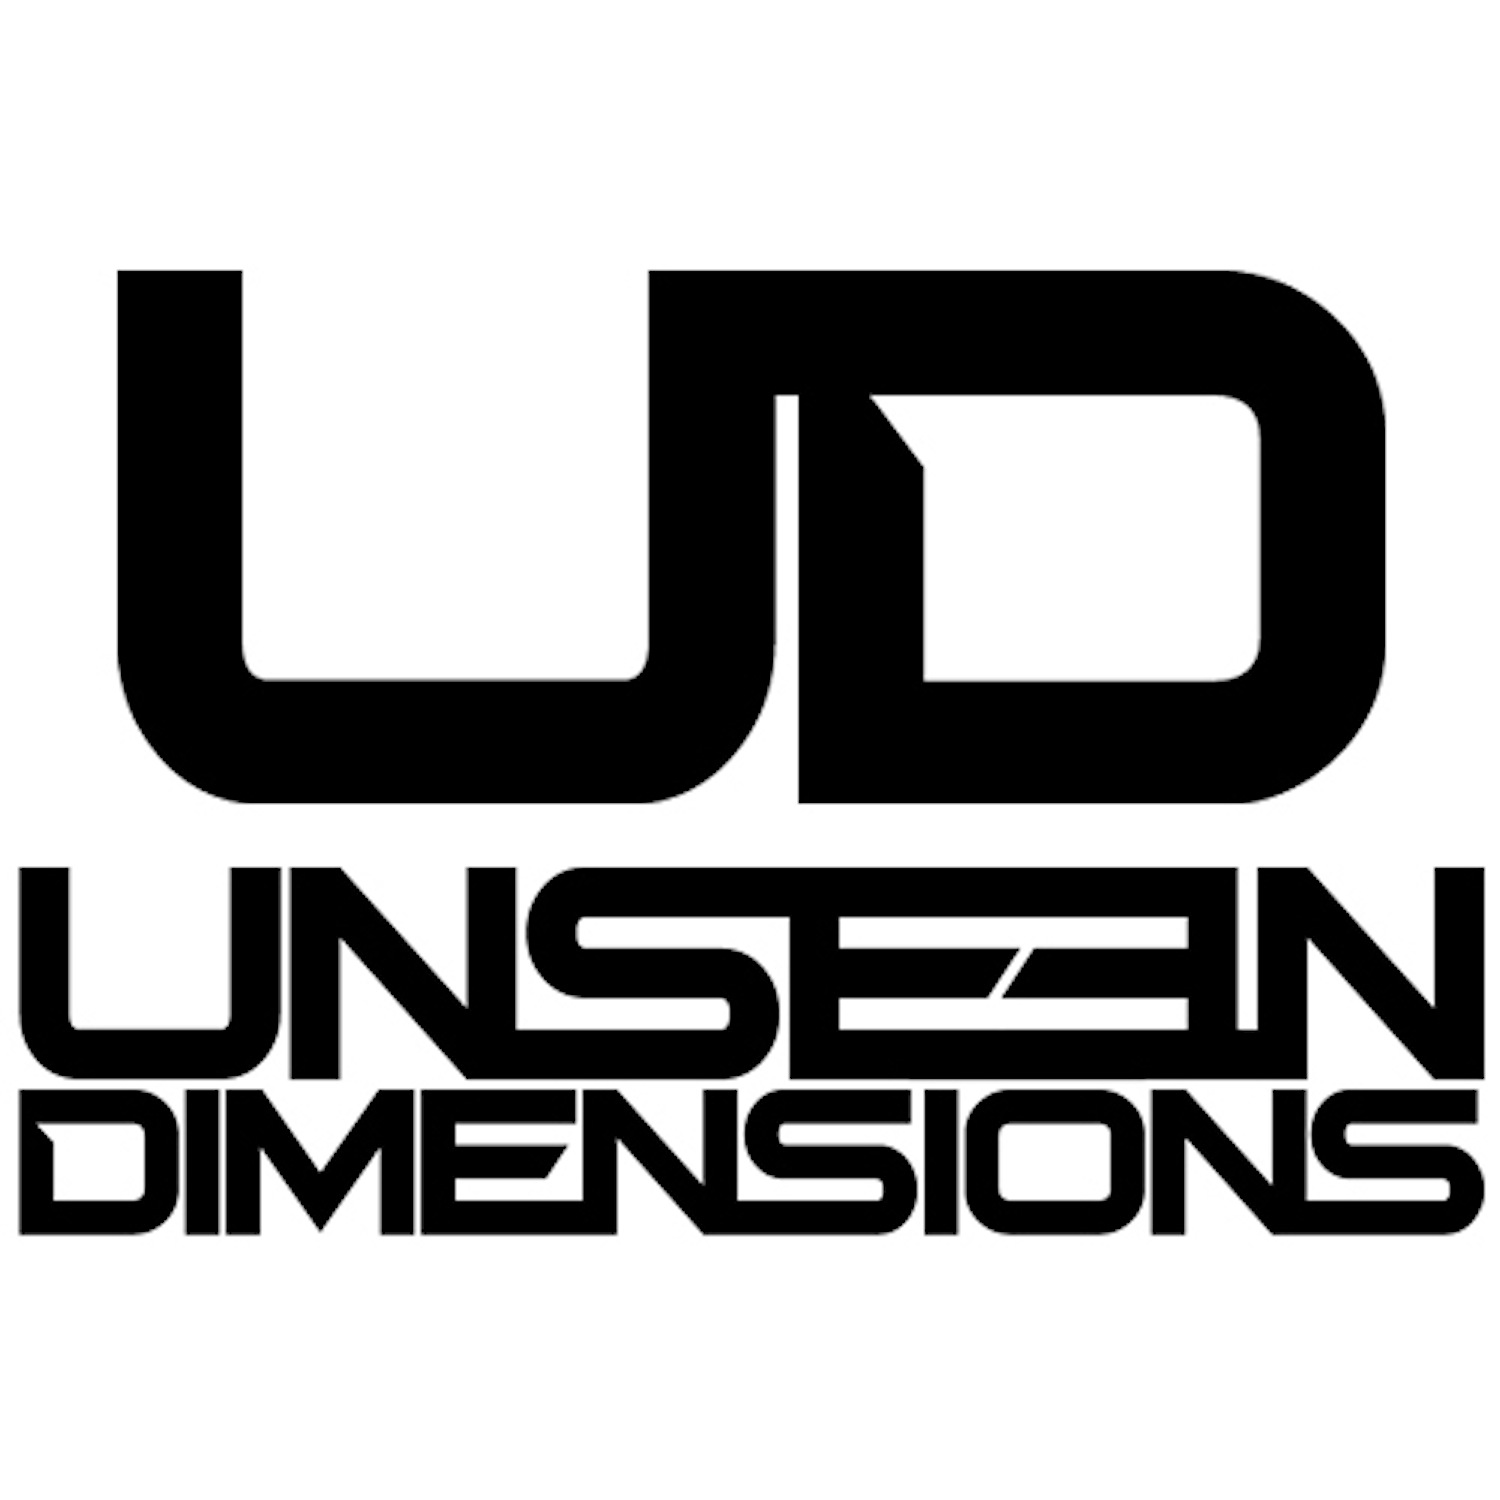 233.UD logo black on white.jpg